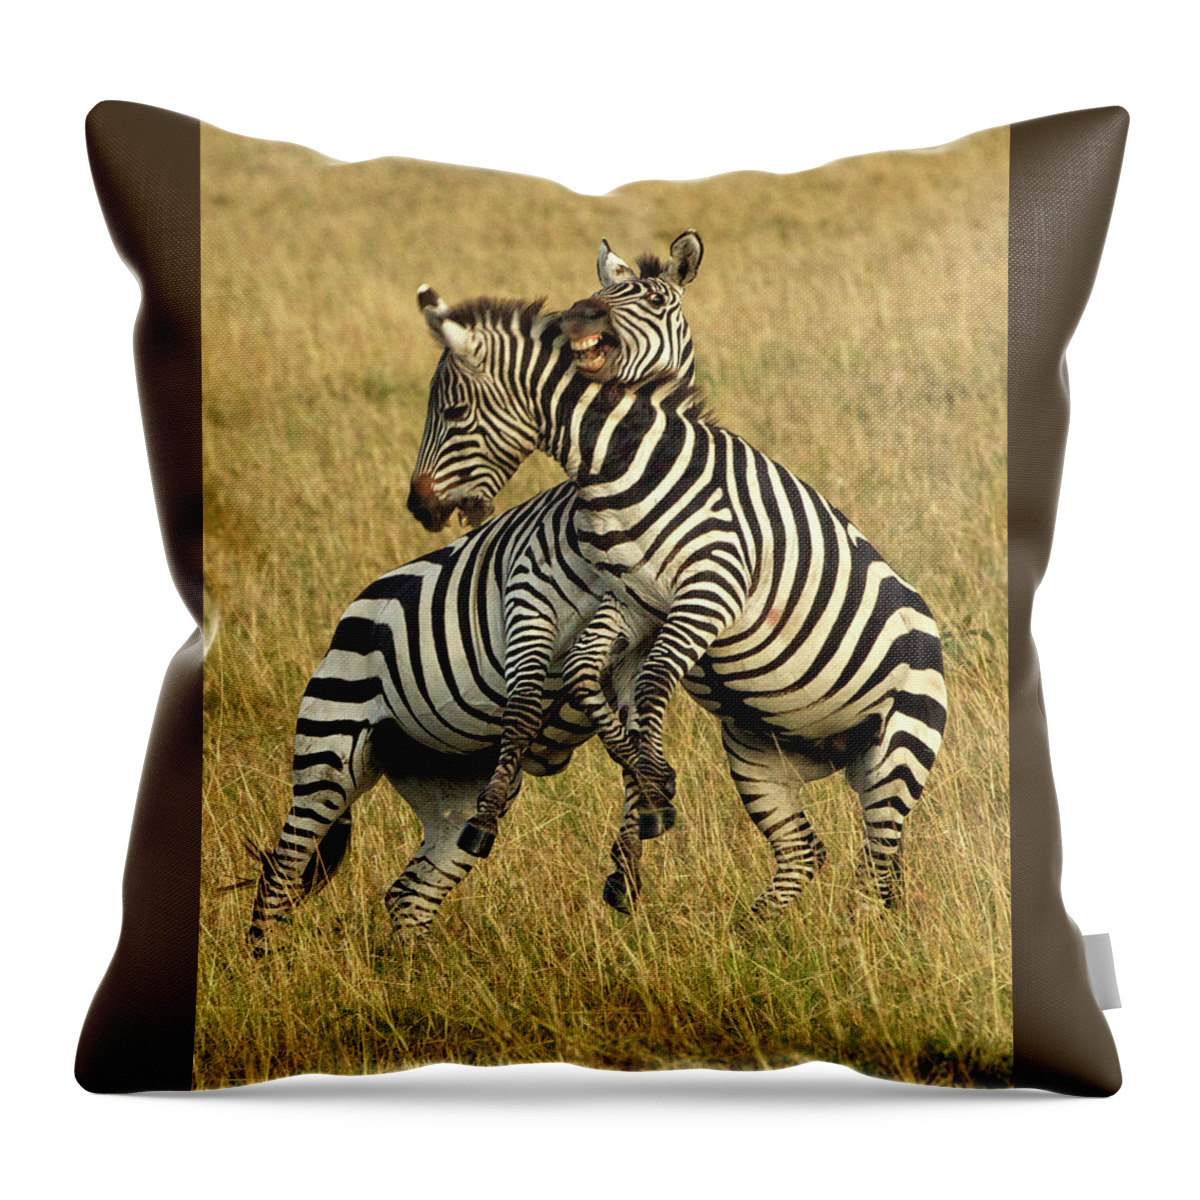 Zebras Throw Pillow featuring the photograph Zebras Battling by Steven Upton